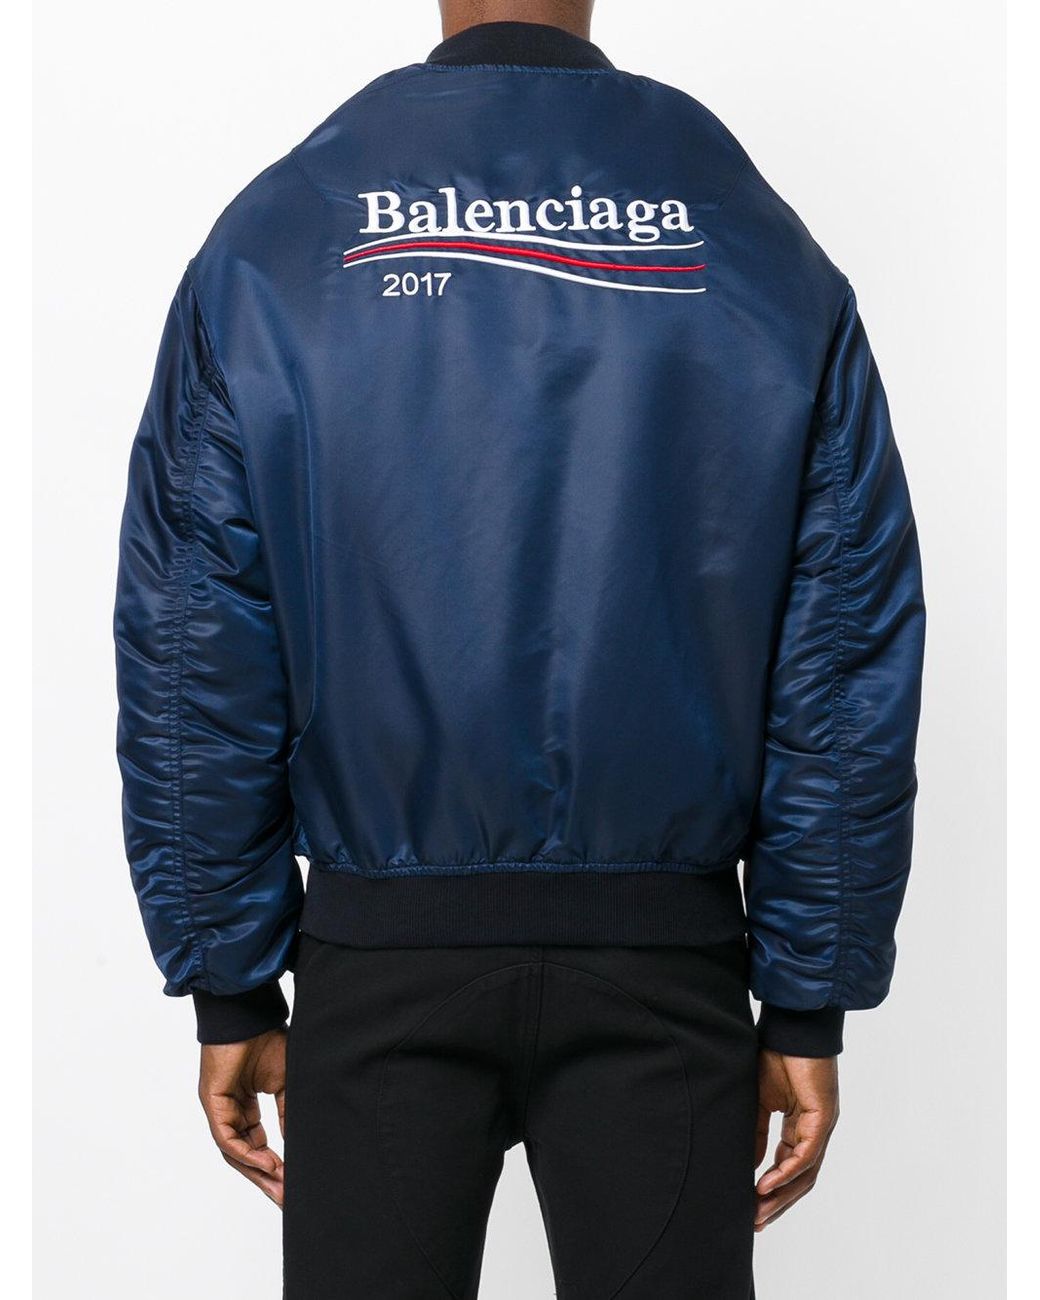 Balenciaga 2017 Bomber Jacket in Blue for Men | Lyst